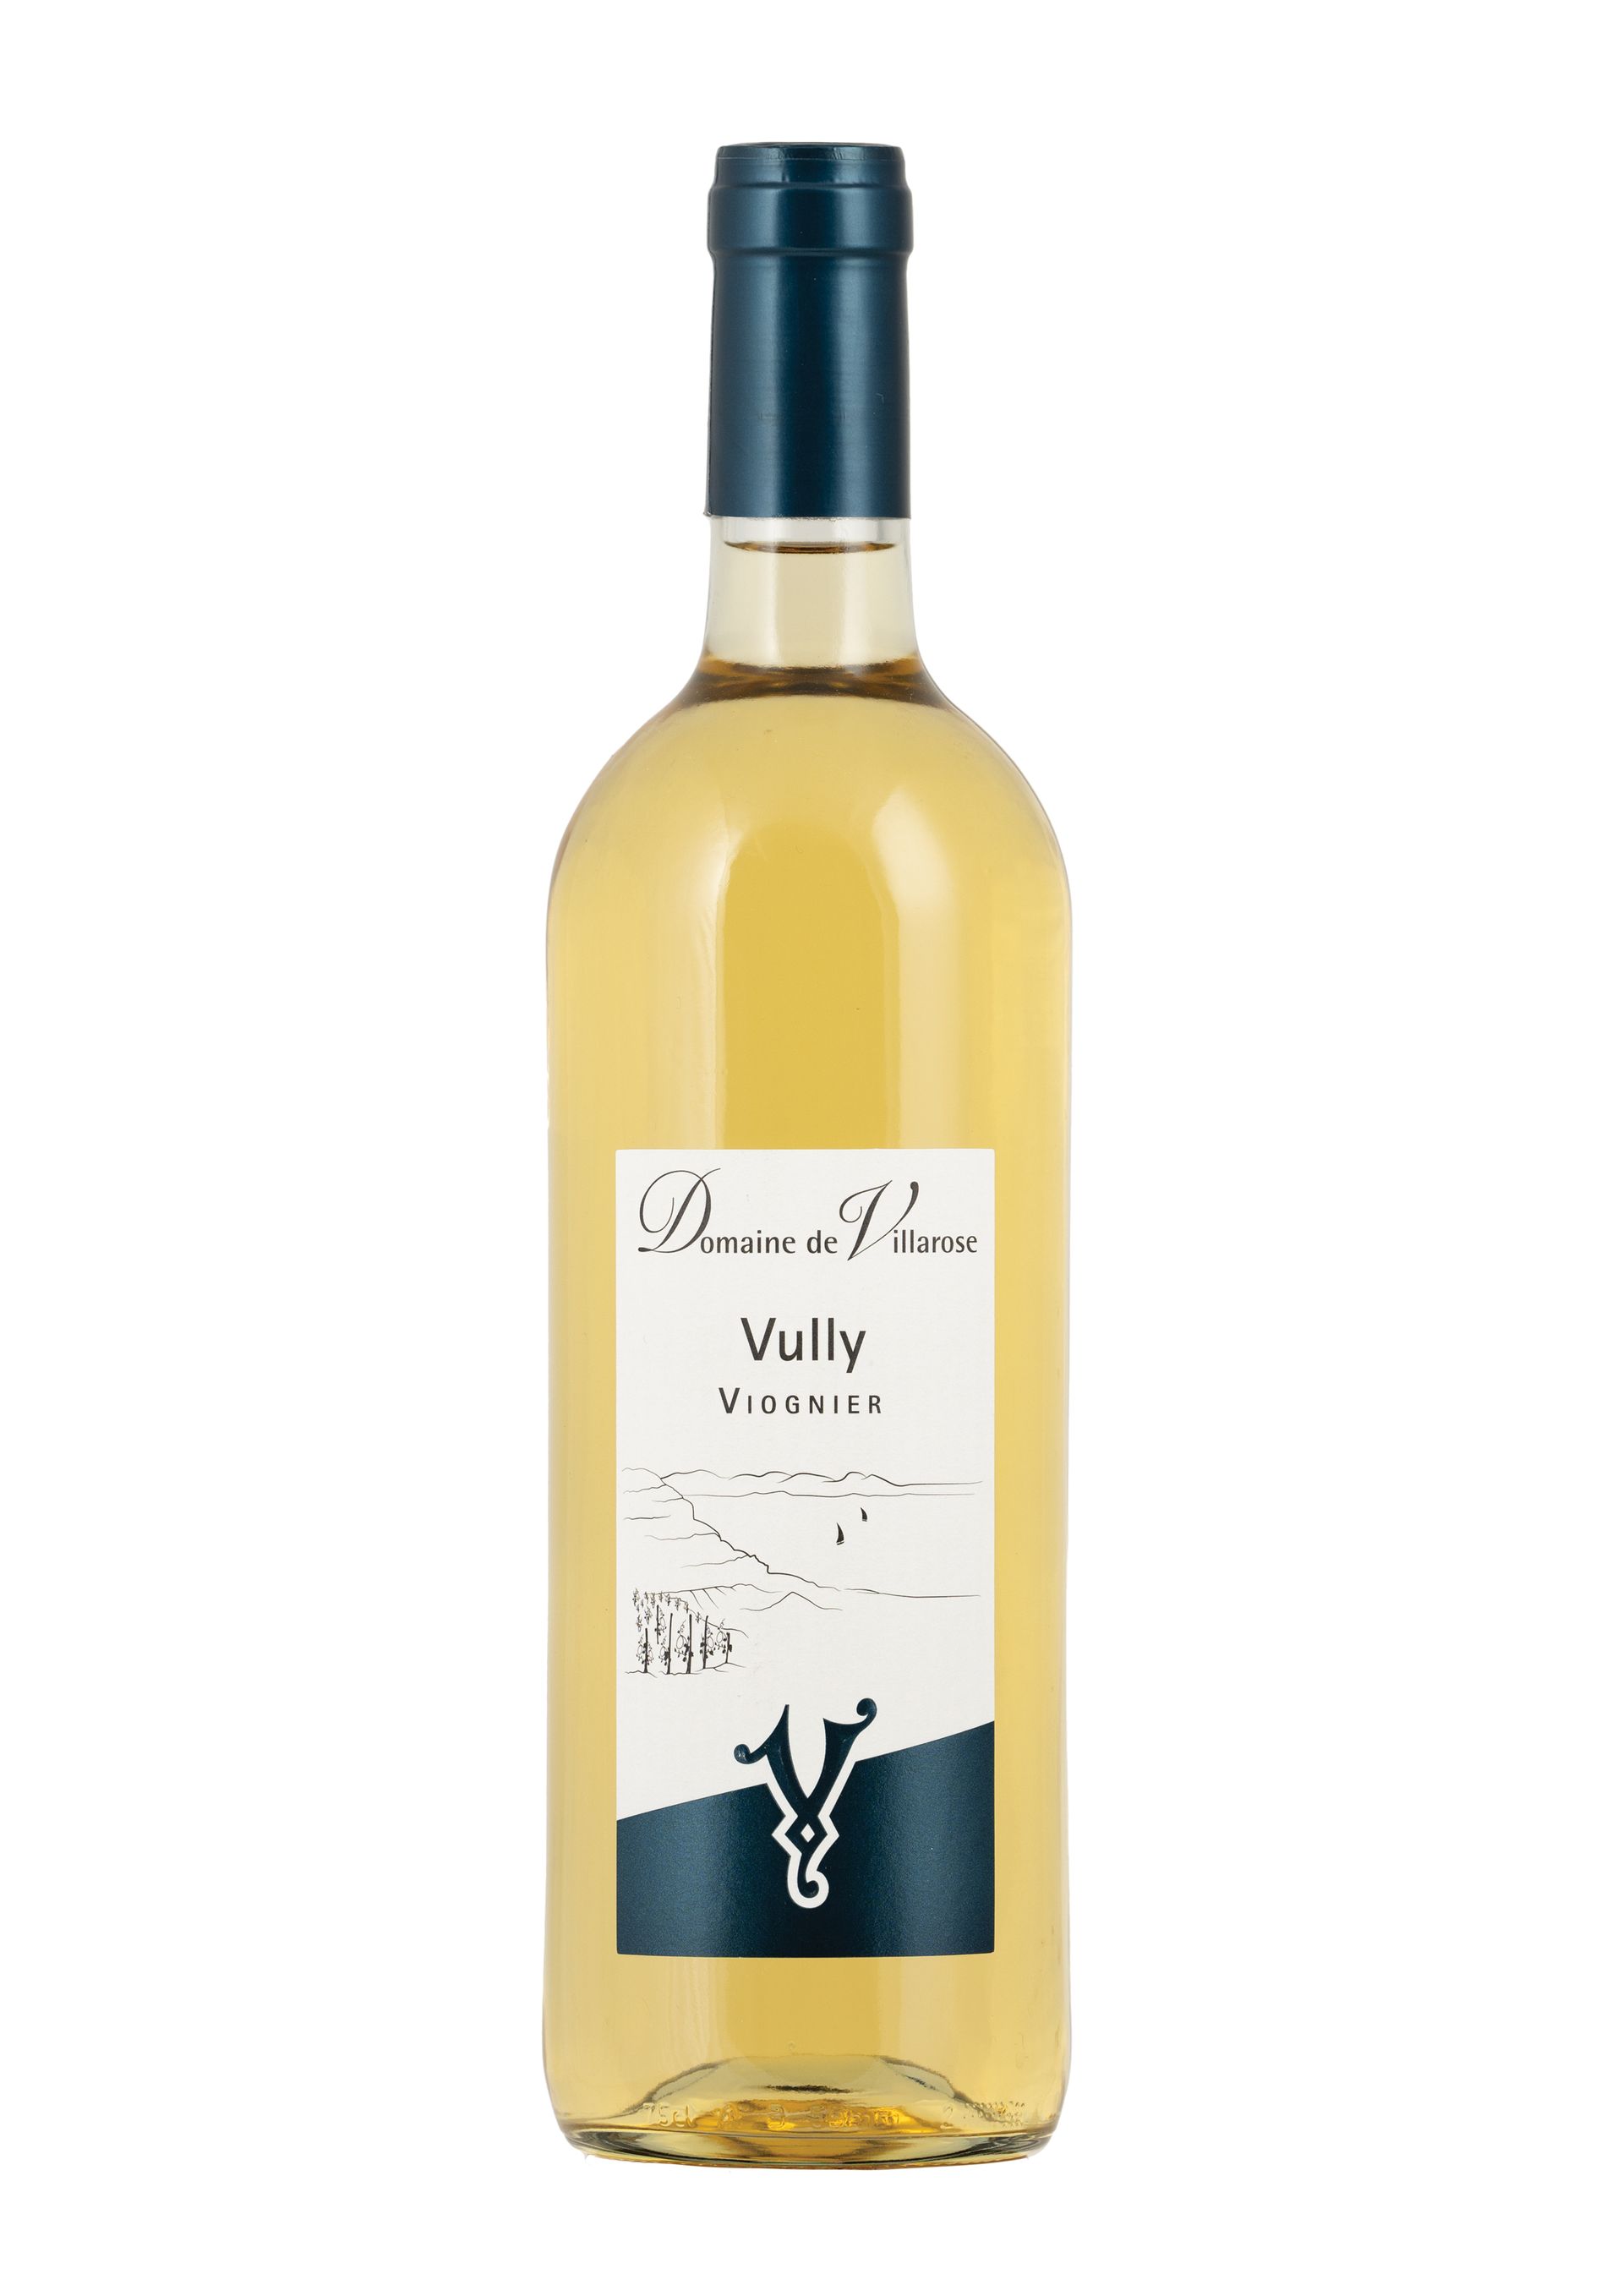 Vully blanc Viognier - Domaine de Villarose à Vully